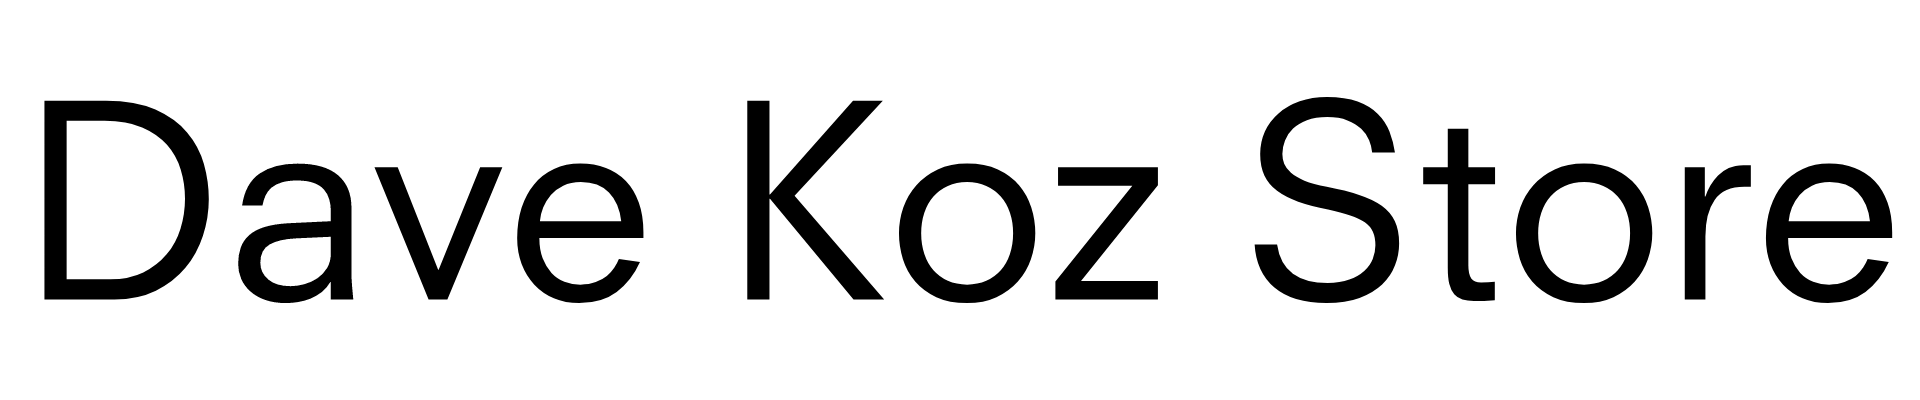 Dave Koz Store logo